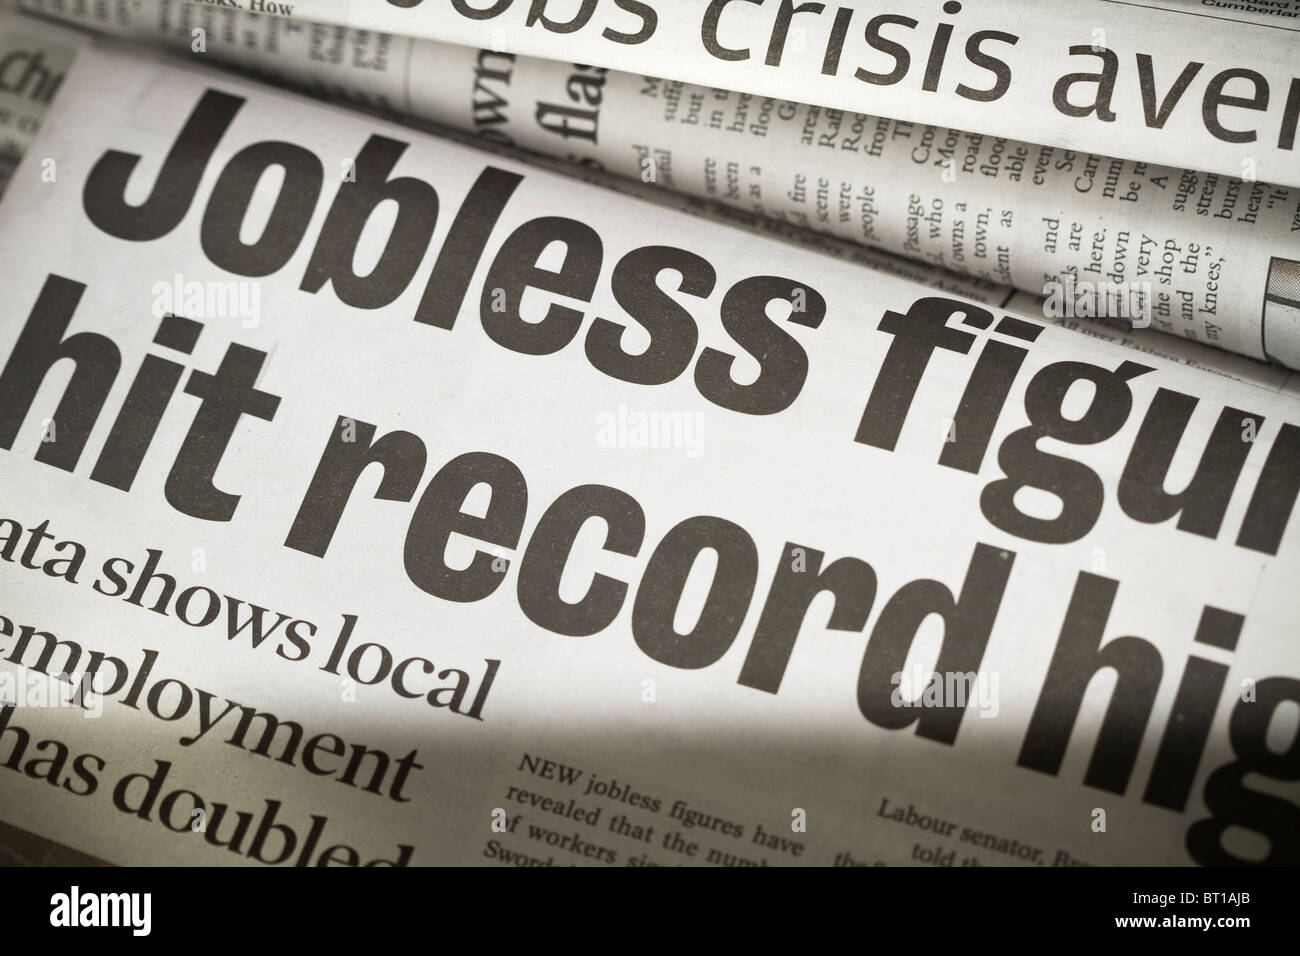 Newspaper headline about jobs crisis Stock Photo